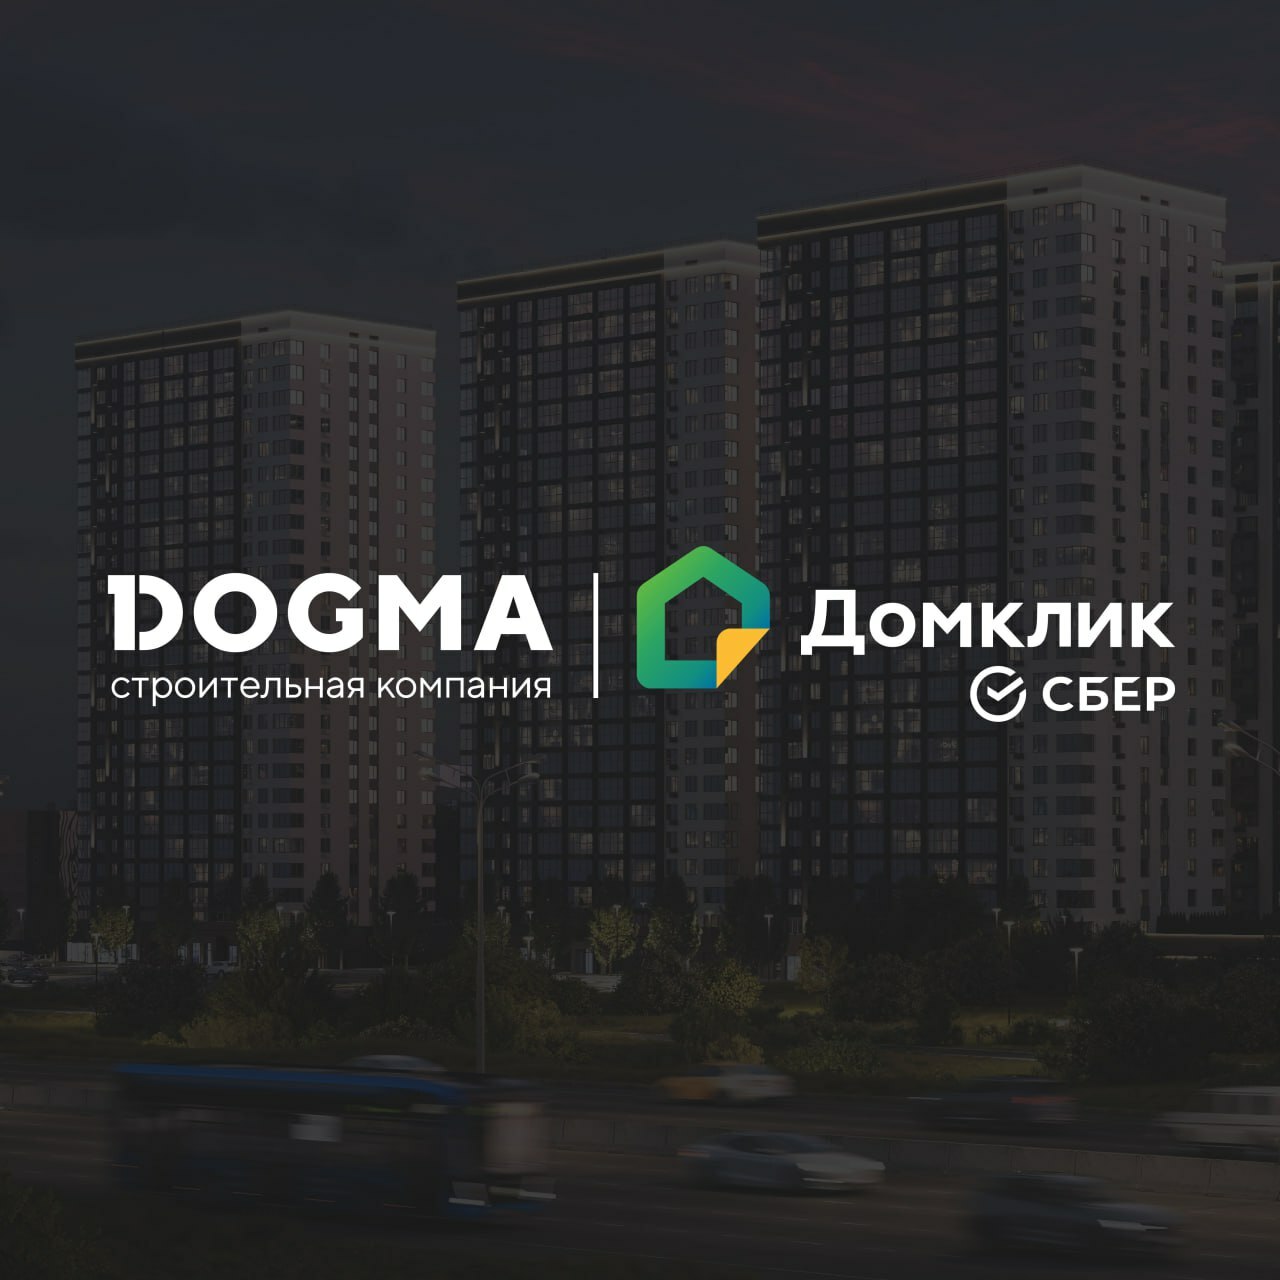 DOGMA и Домклик запустили комбо-ипотеку